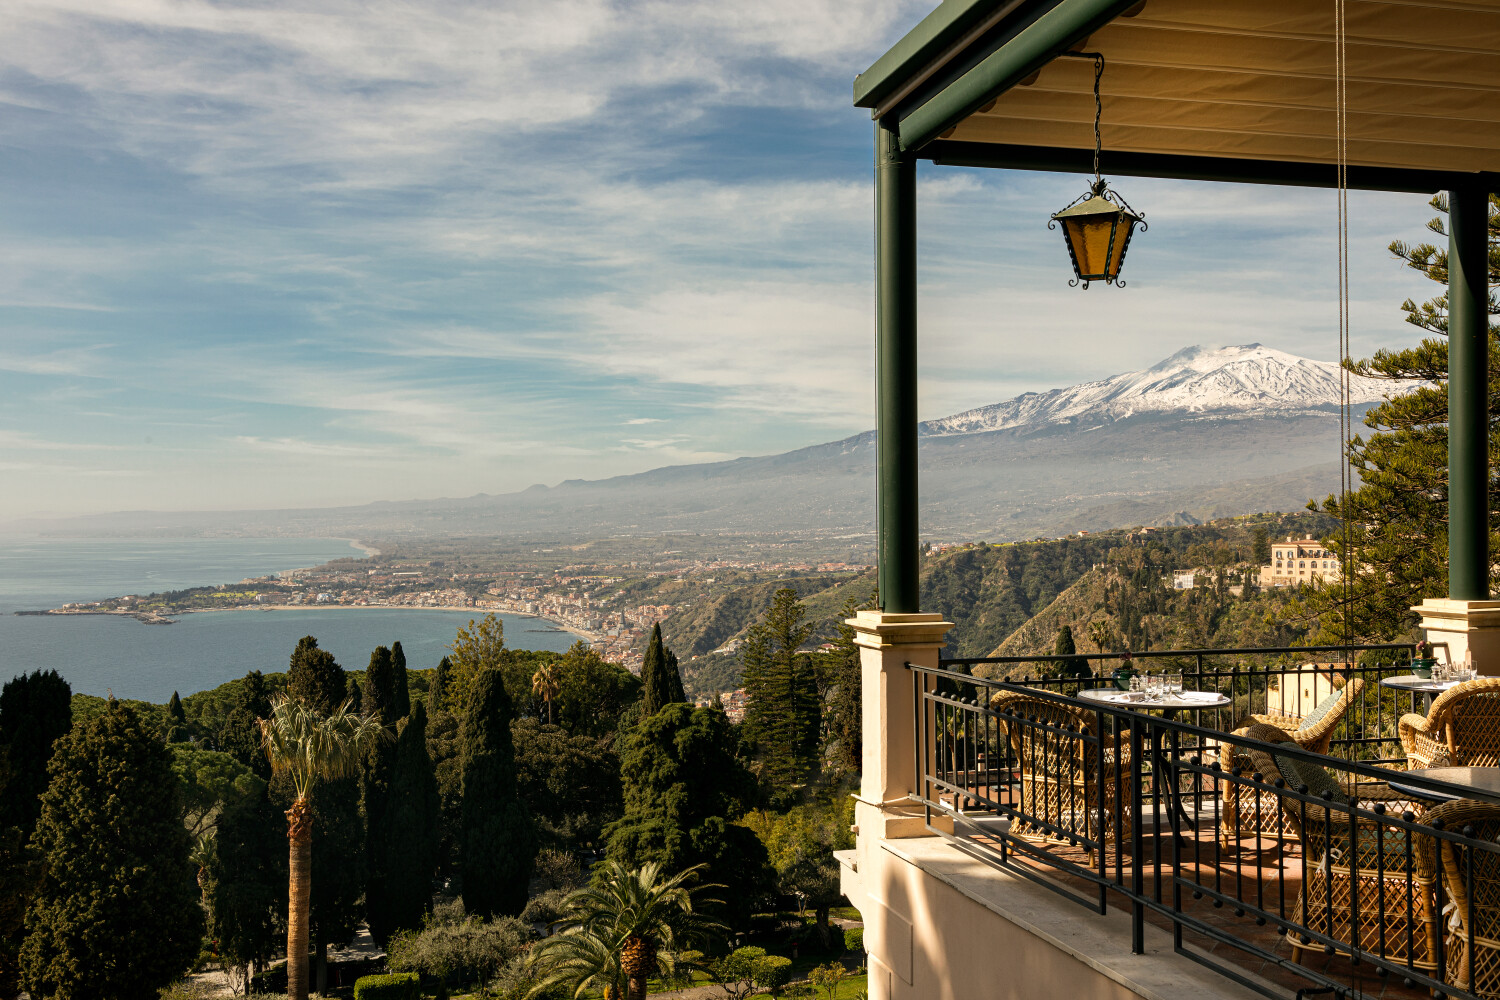 Grand Hotel Timeo, A Belmond Hotel, Taormina celebrates 150 years